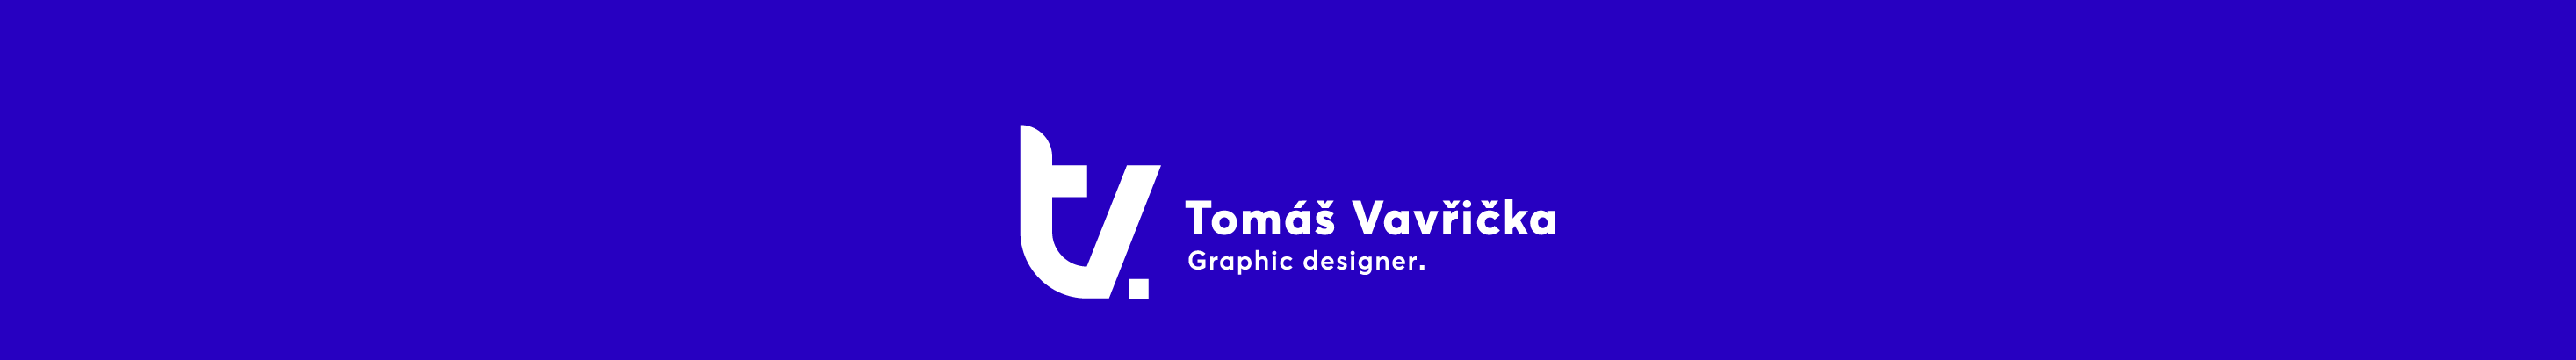 Tomáš Vavřička's profile banner